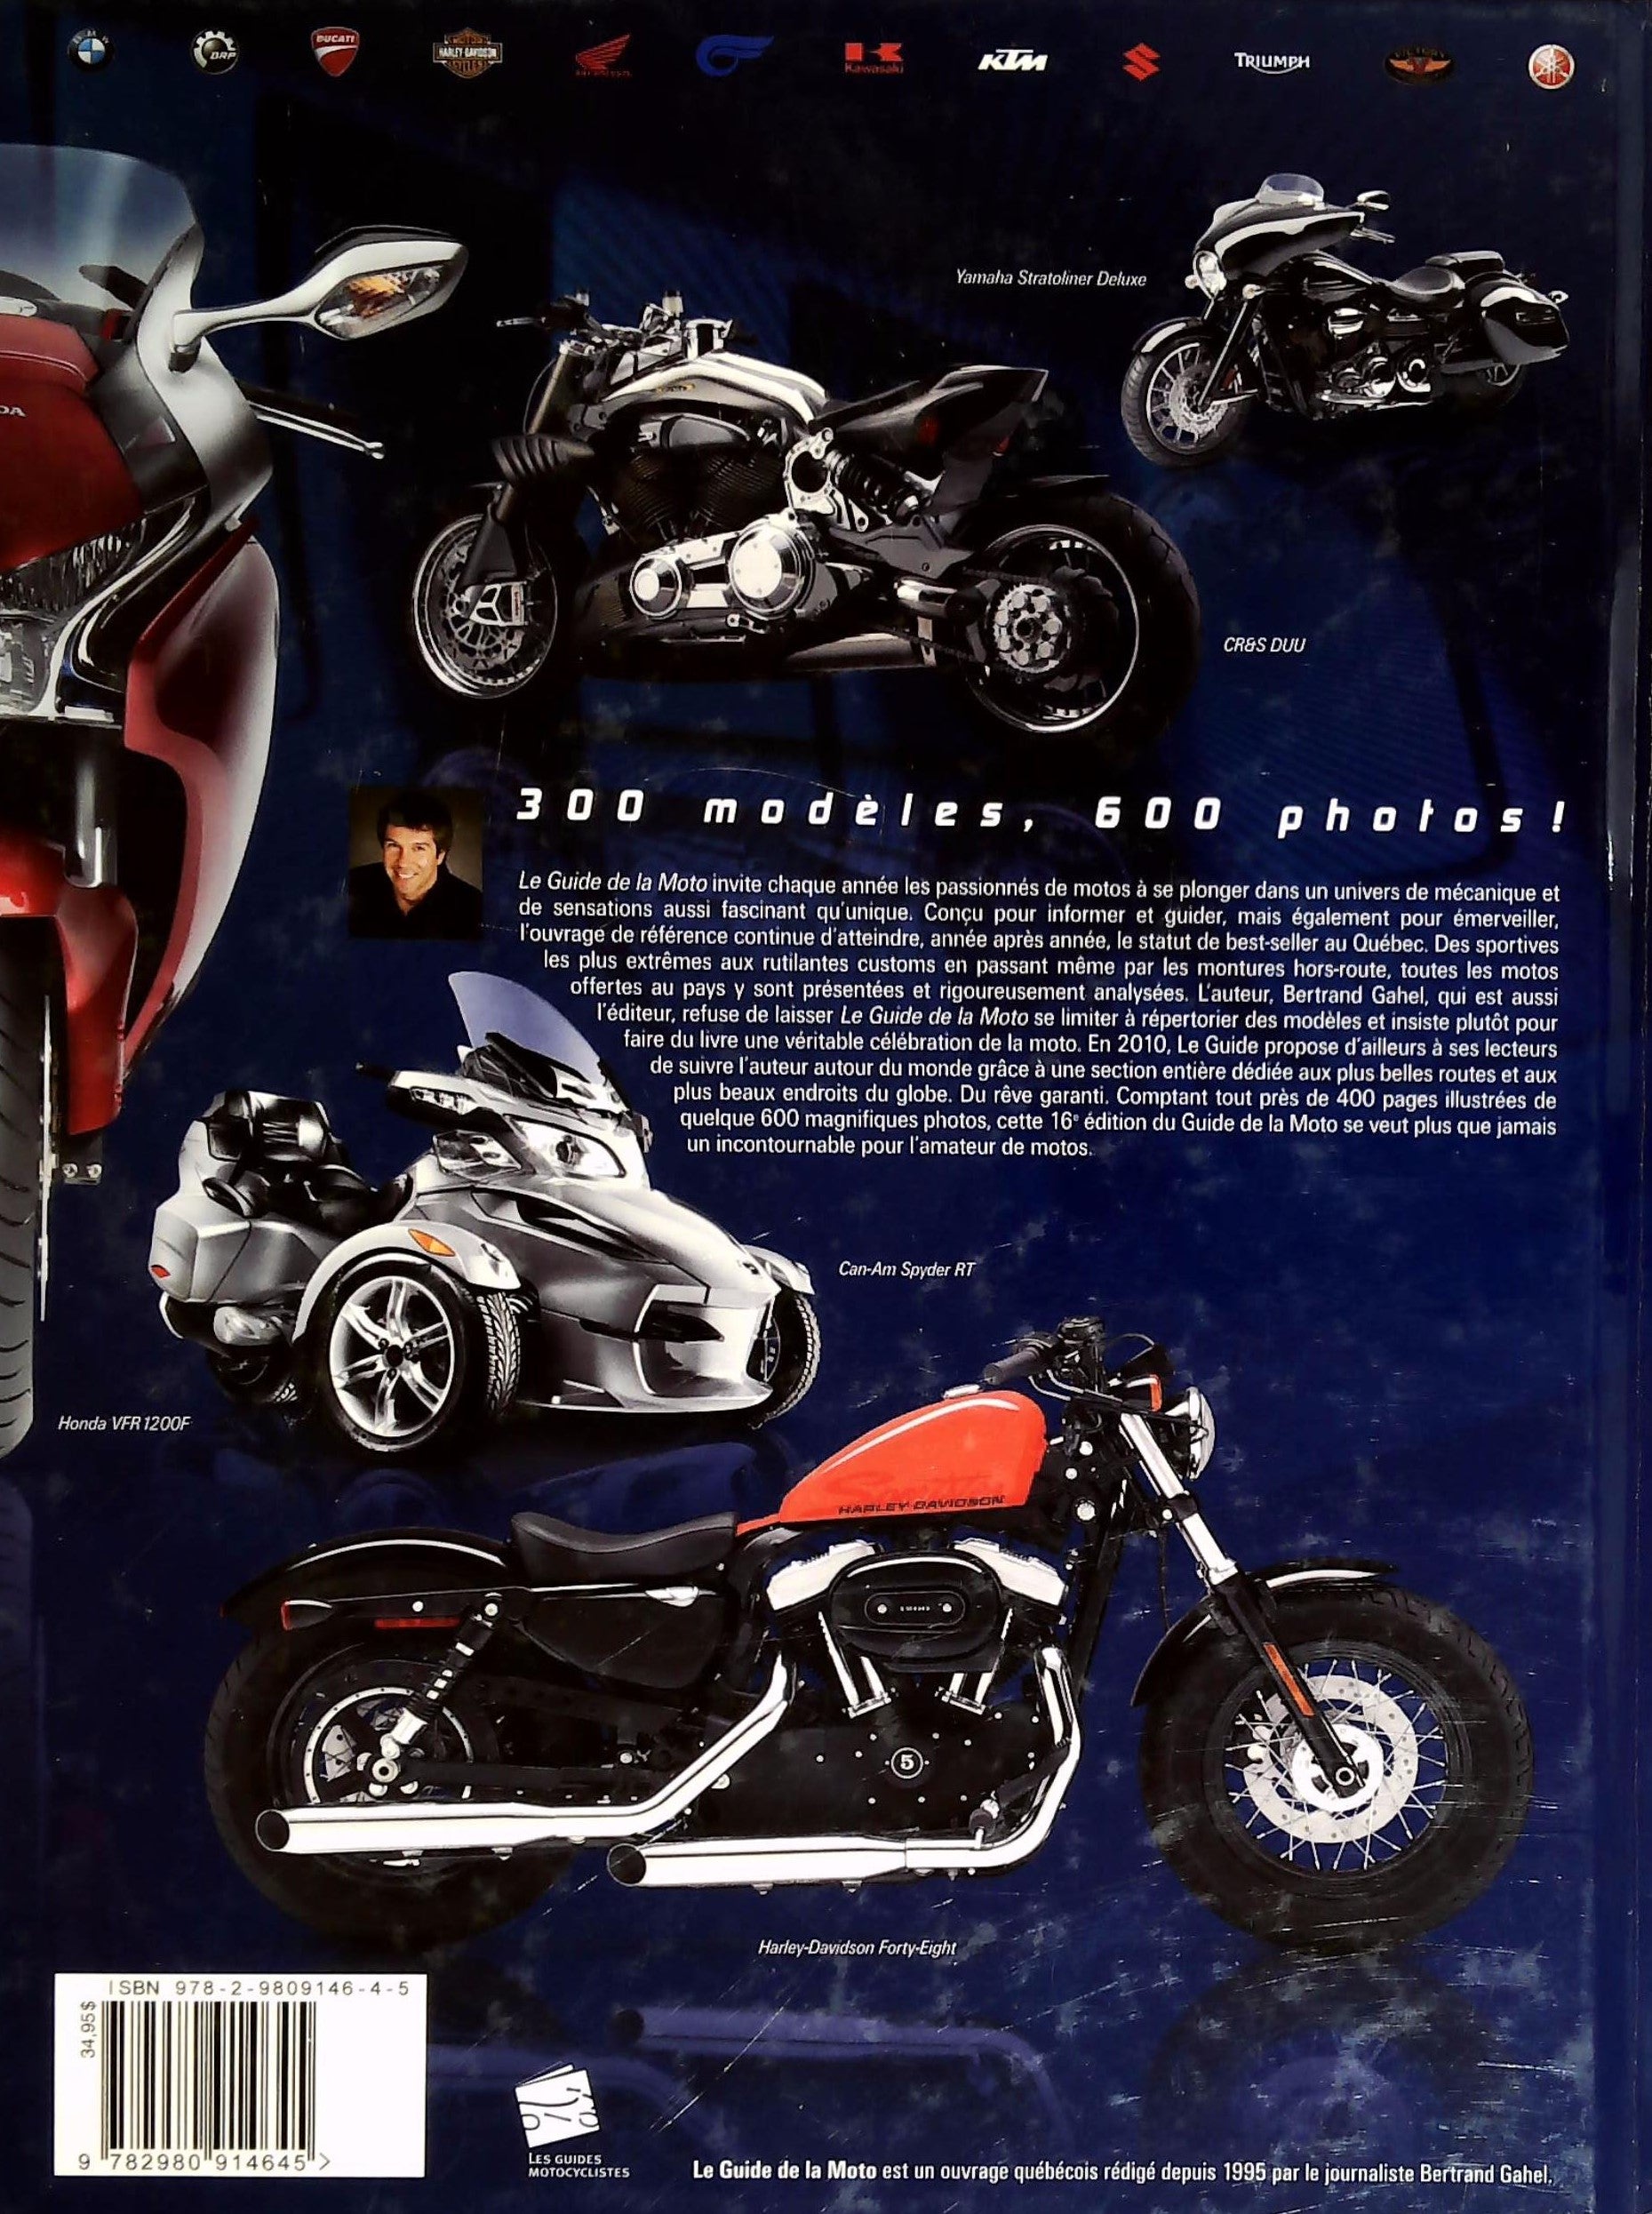 Le guide de la moto 2010 (Bertrand Gahel)